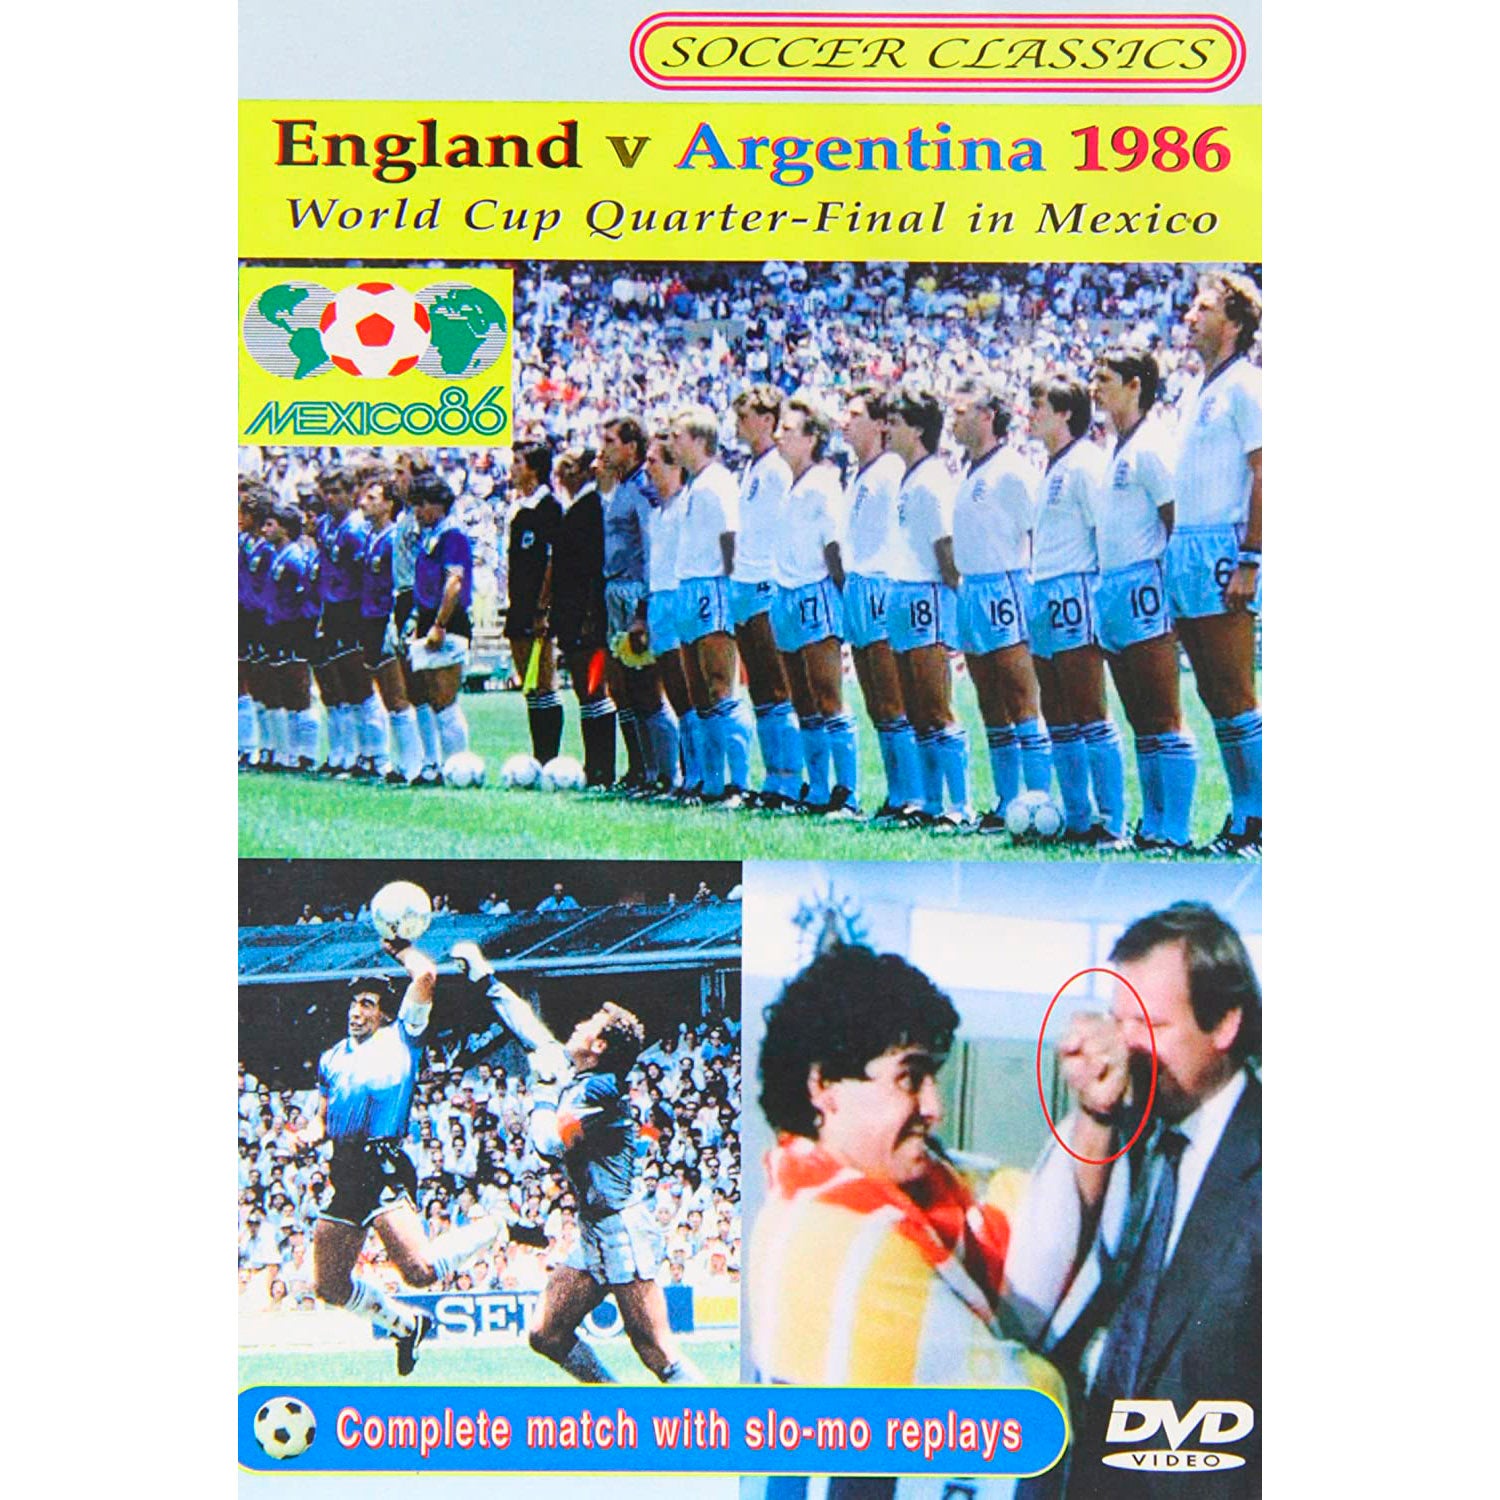 1986 World Cup Quarter-Final – England vs Argentina